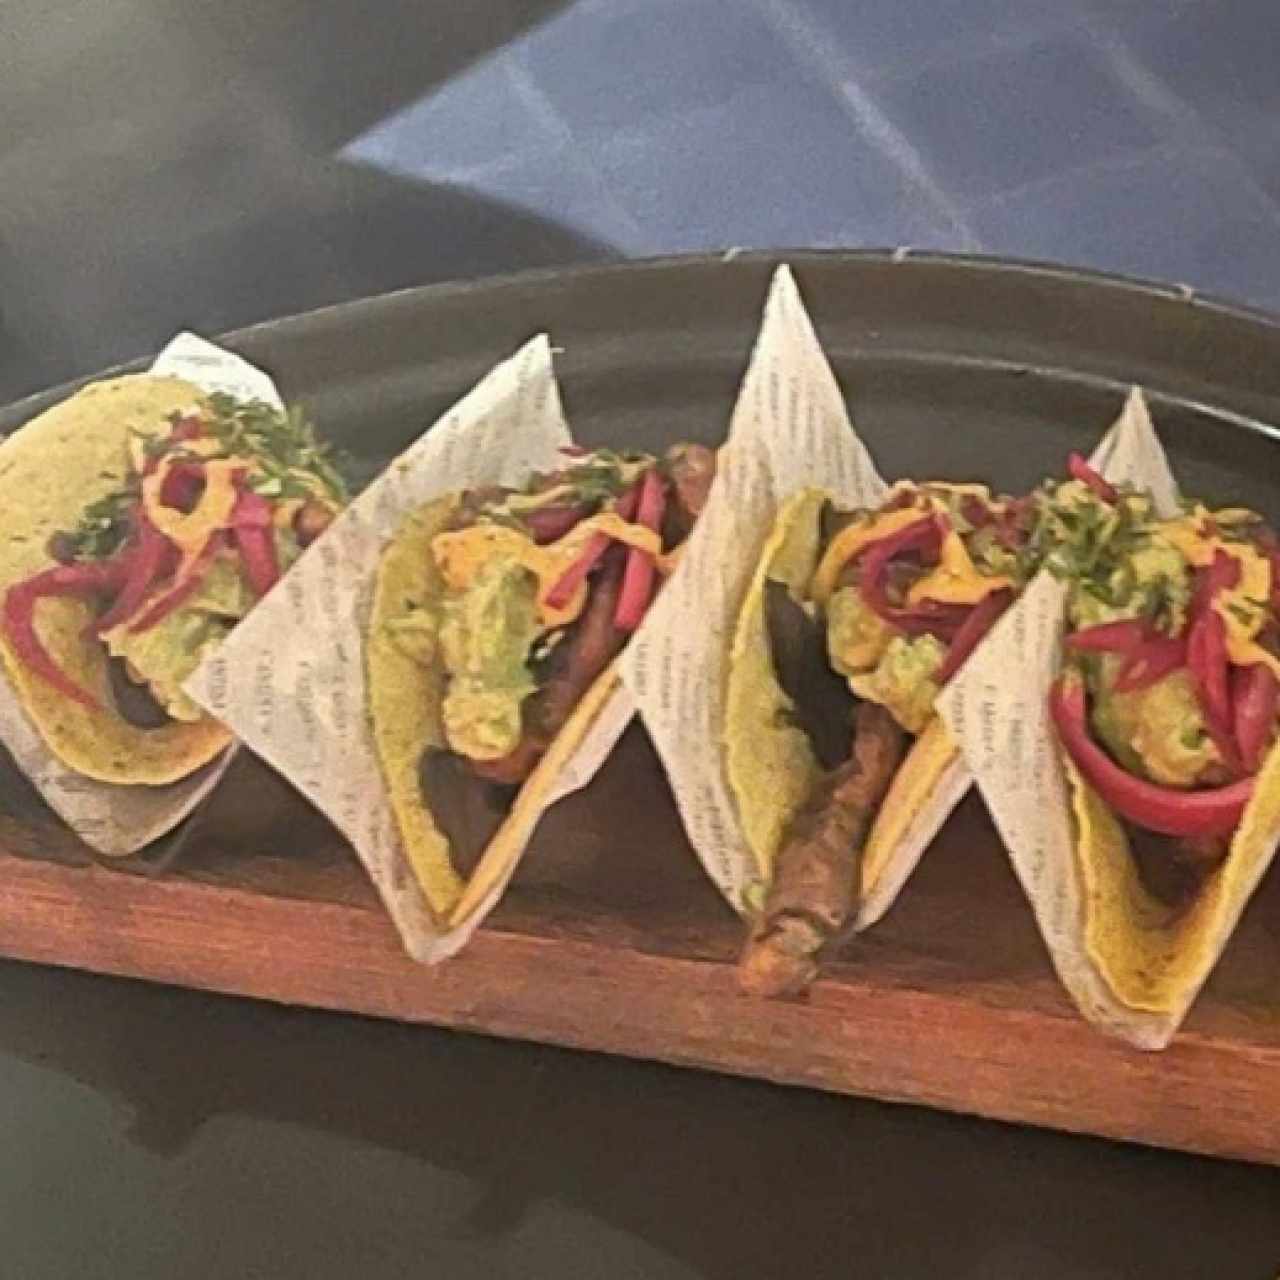 Tacos de ri bye